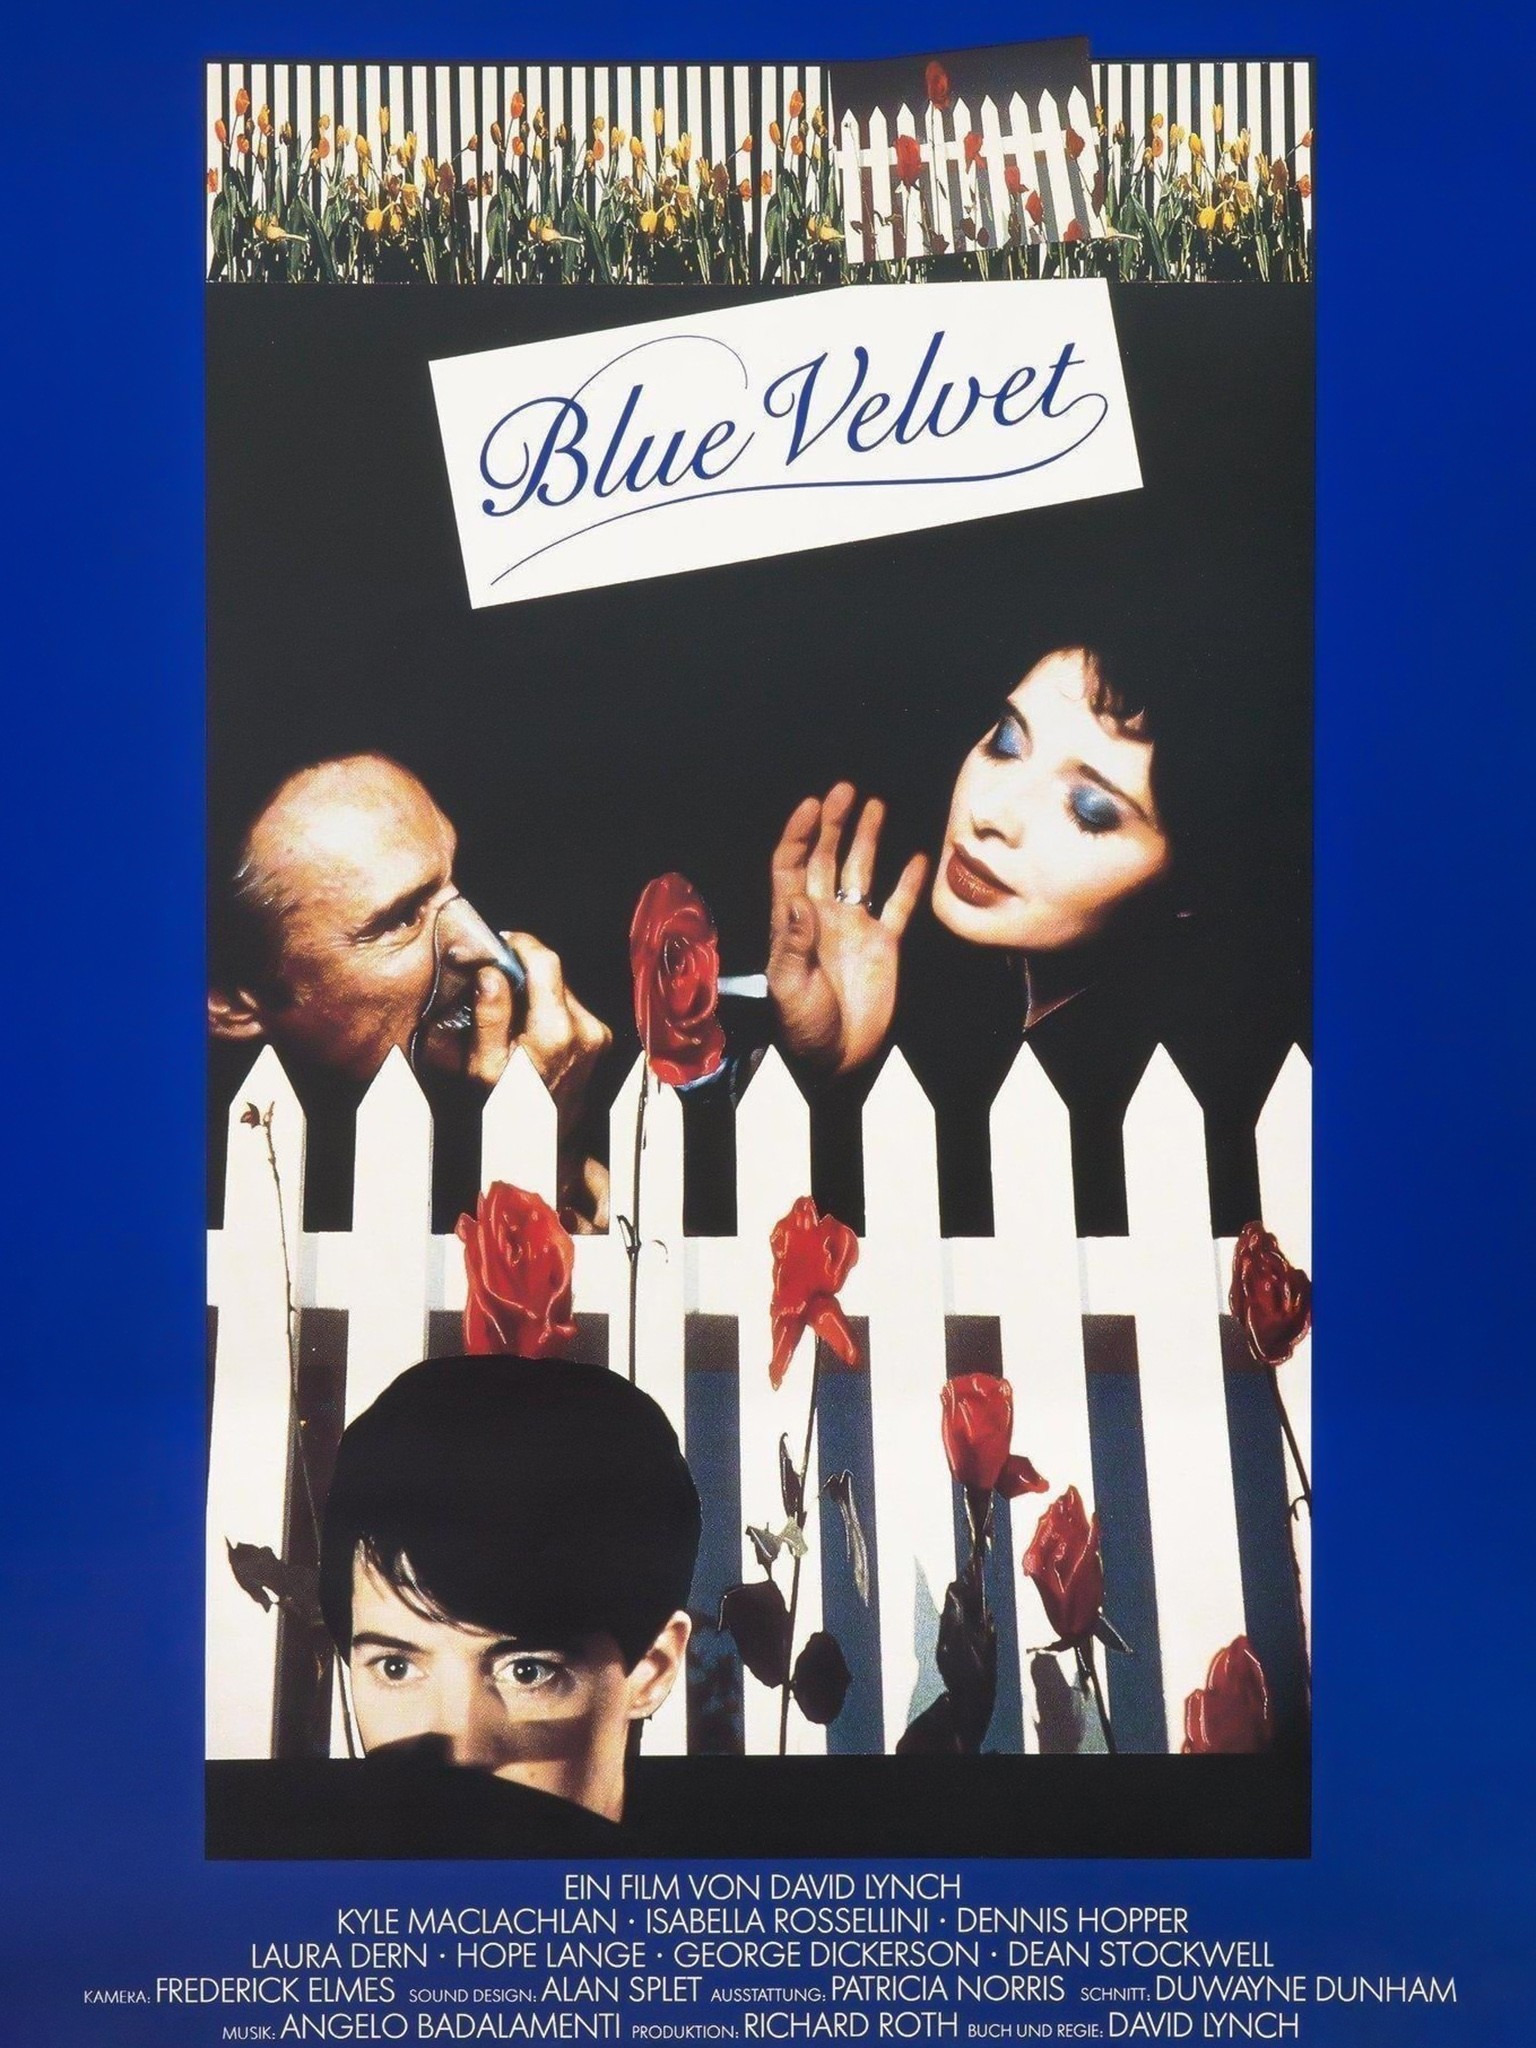 Blue Velvet - Isabella Rossellini and Kyle Maclachlan – beautiful